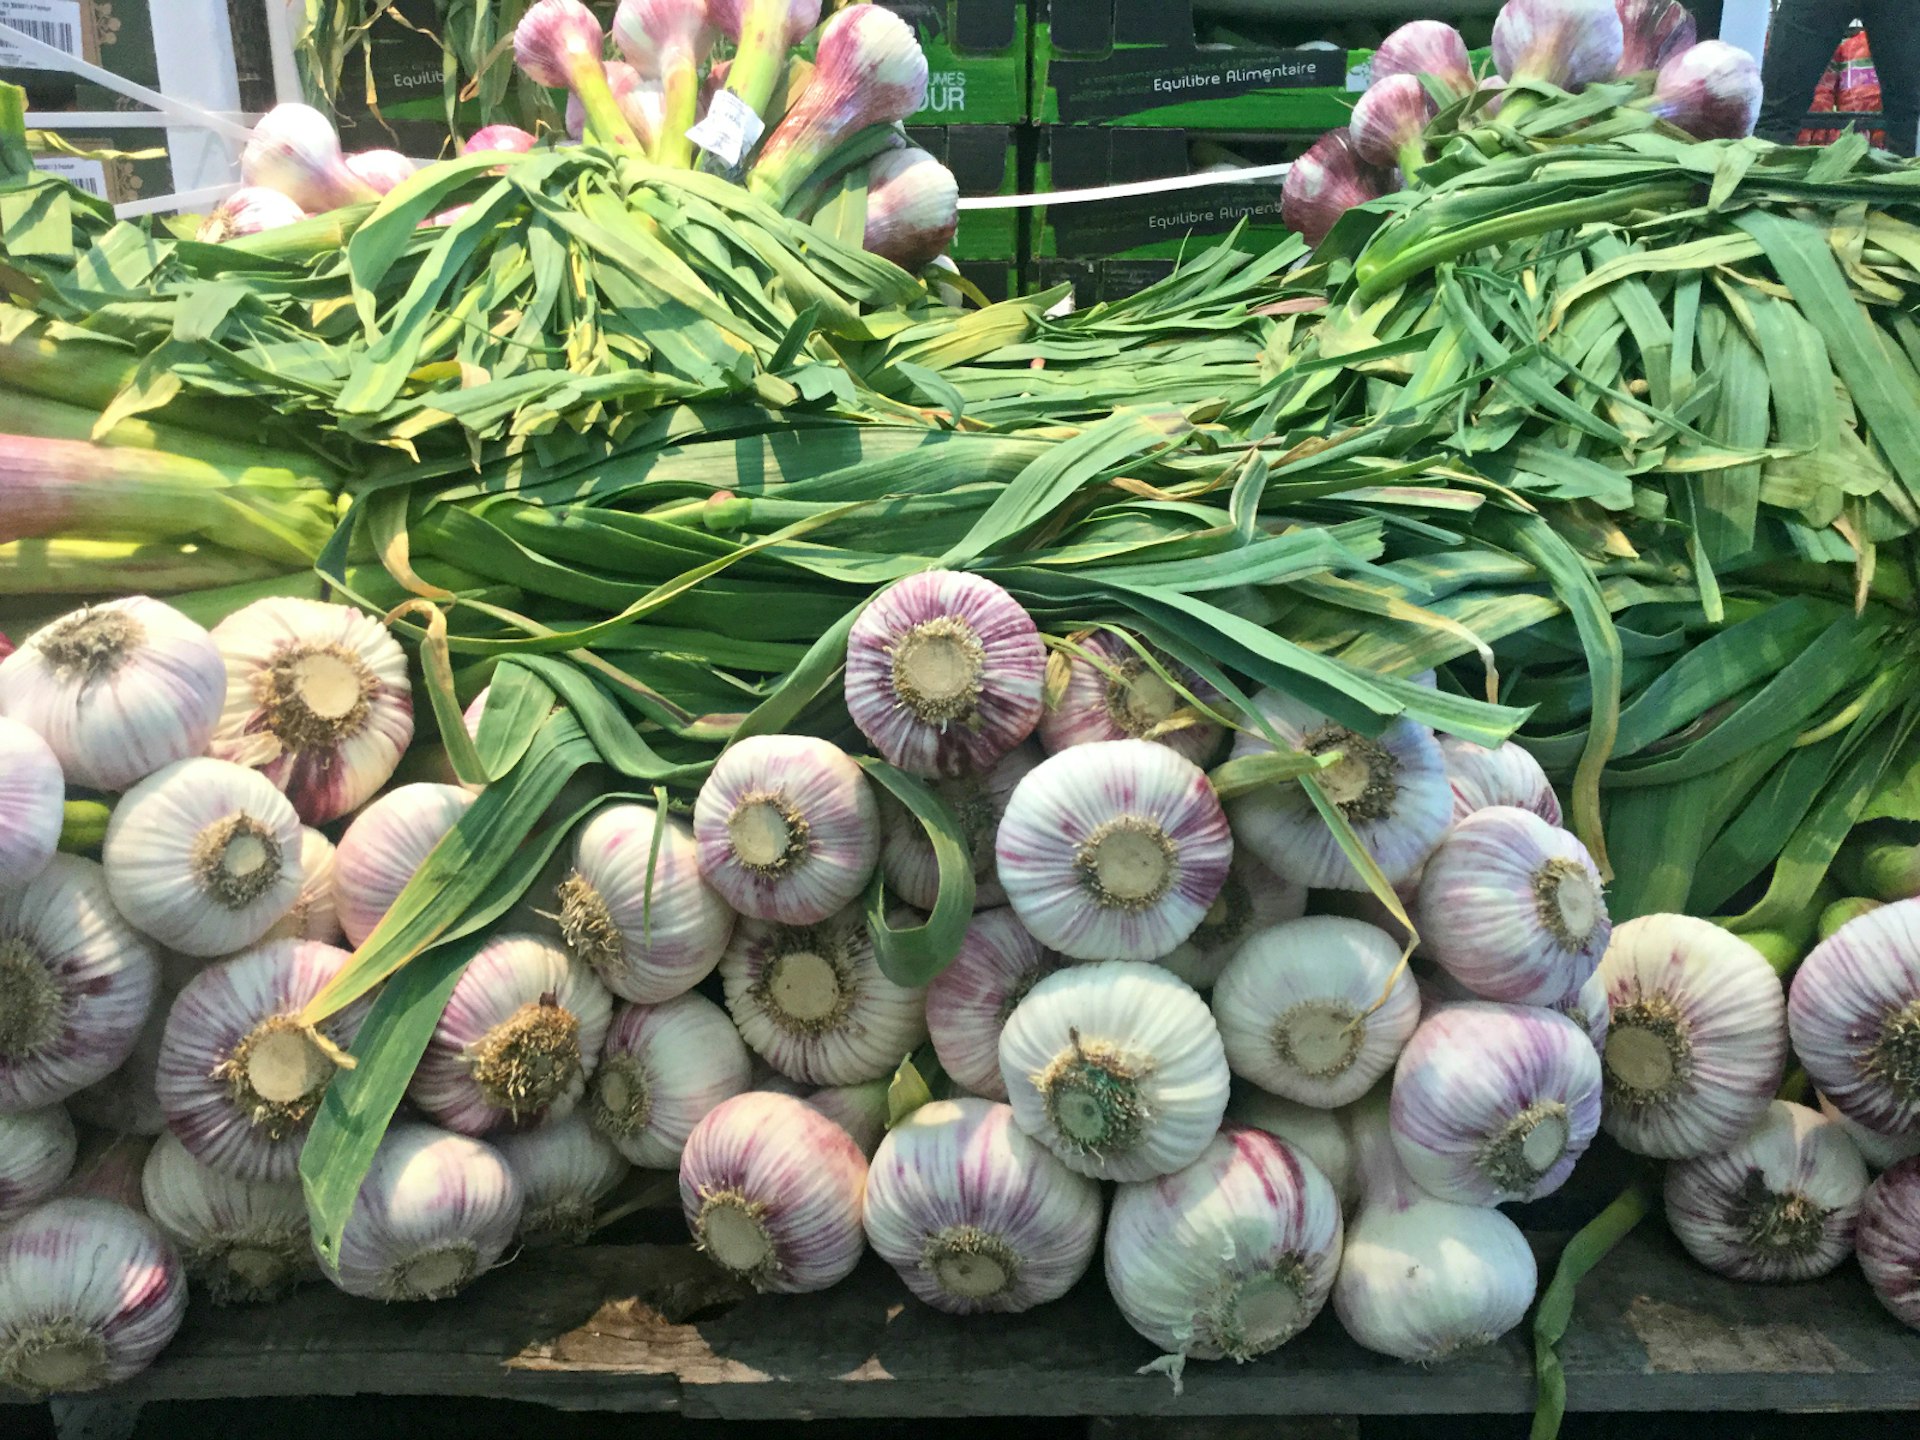 Bunches of fresh garlic at Rungis International Market in Paris, France